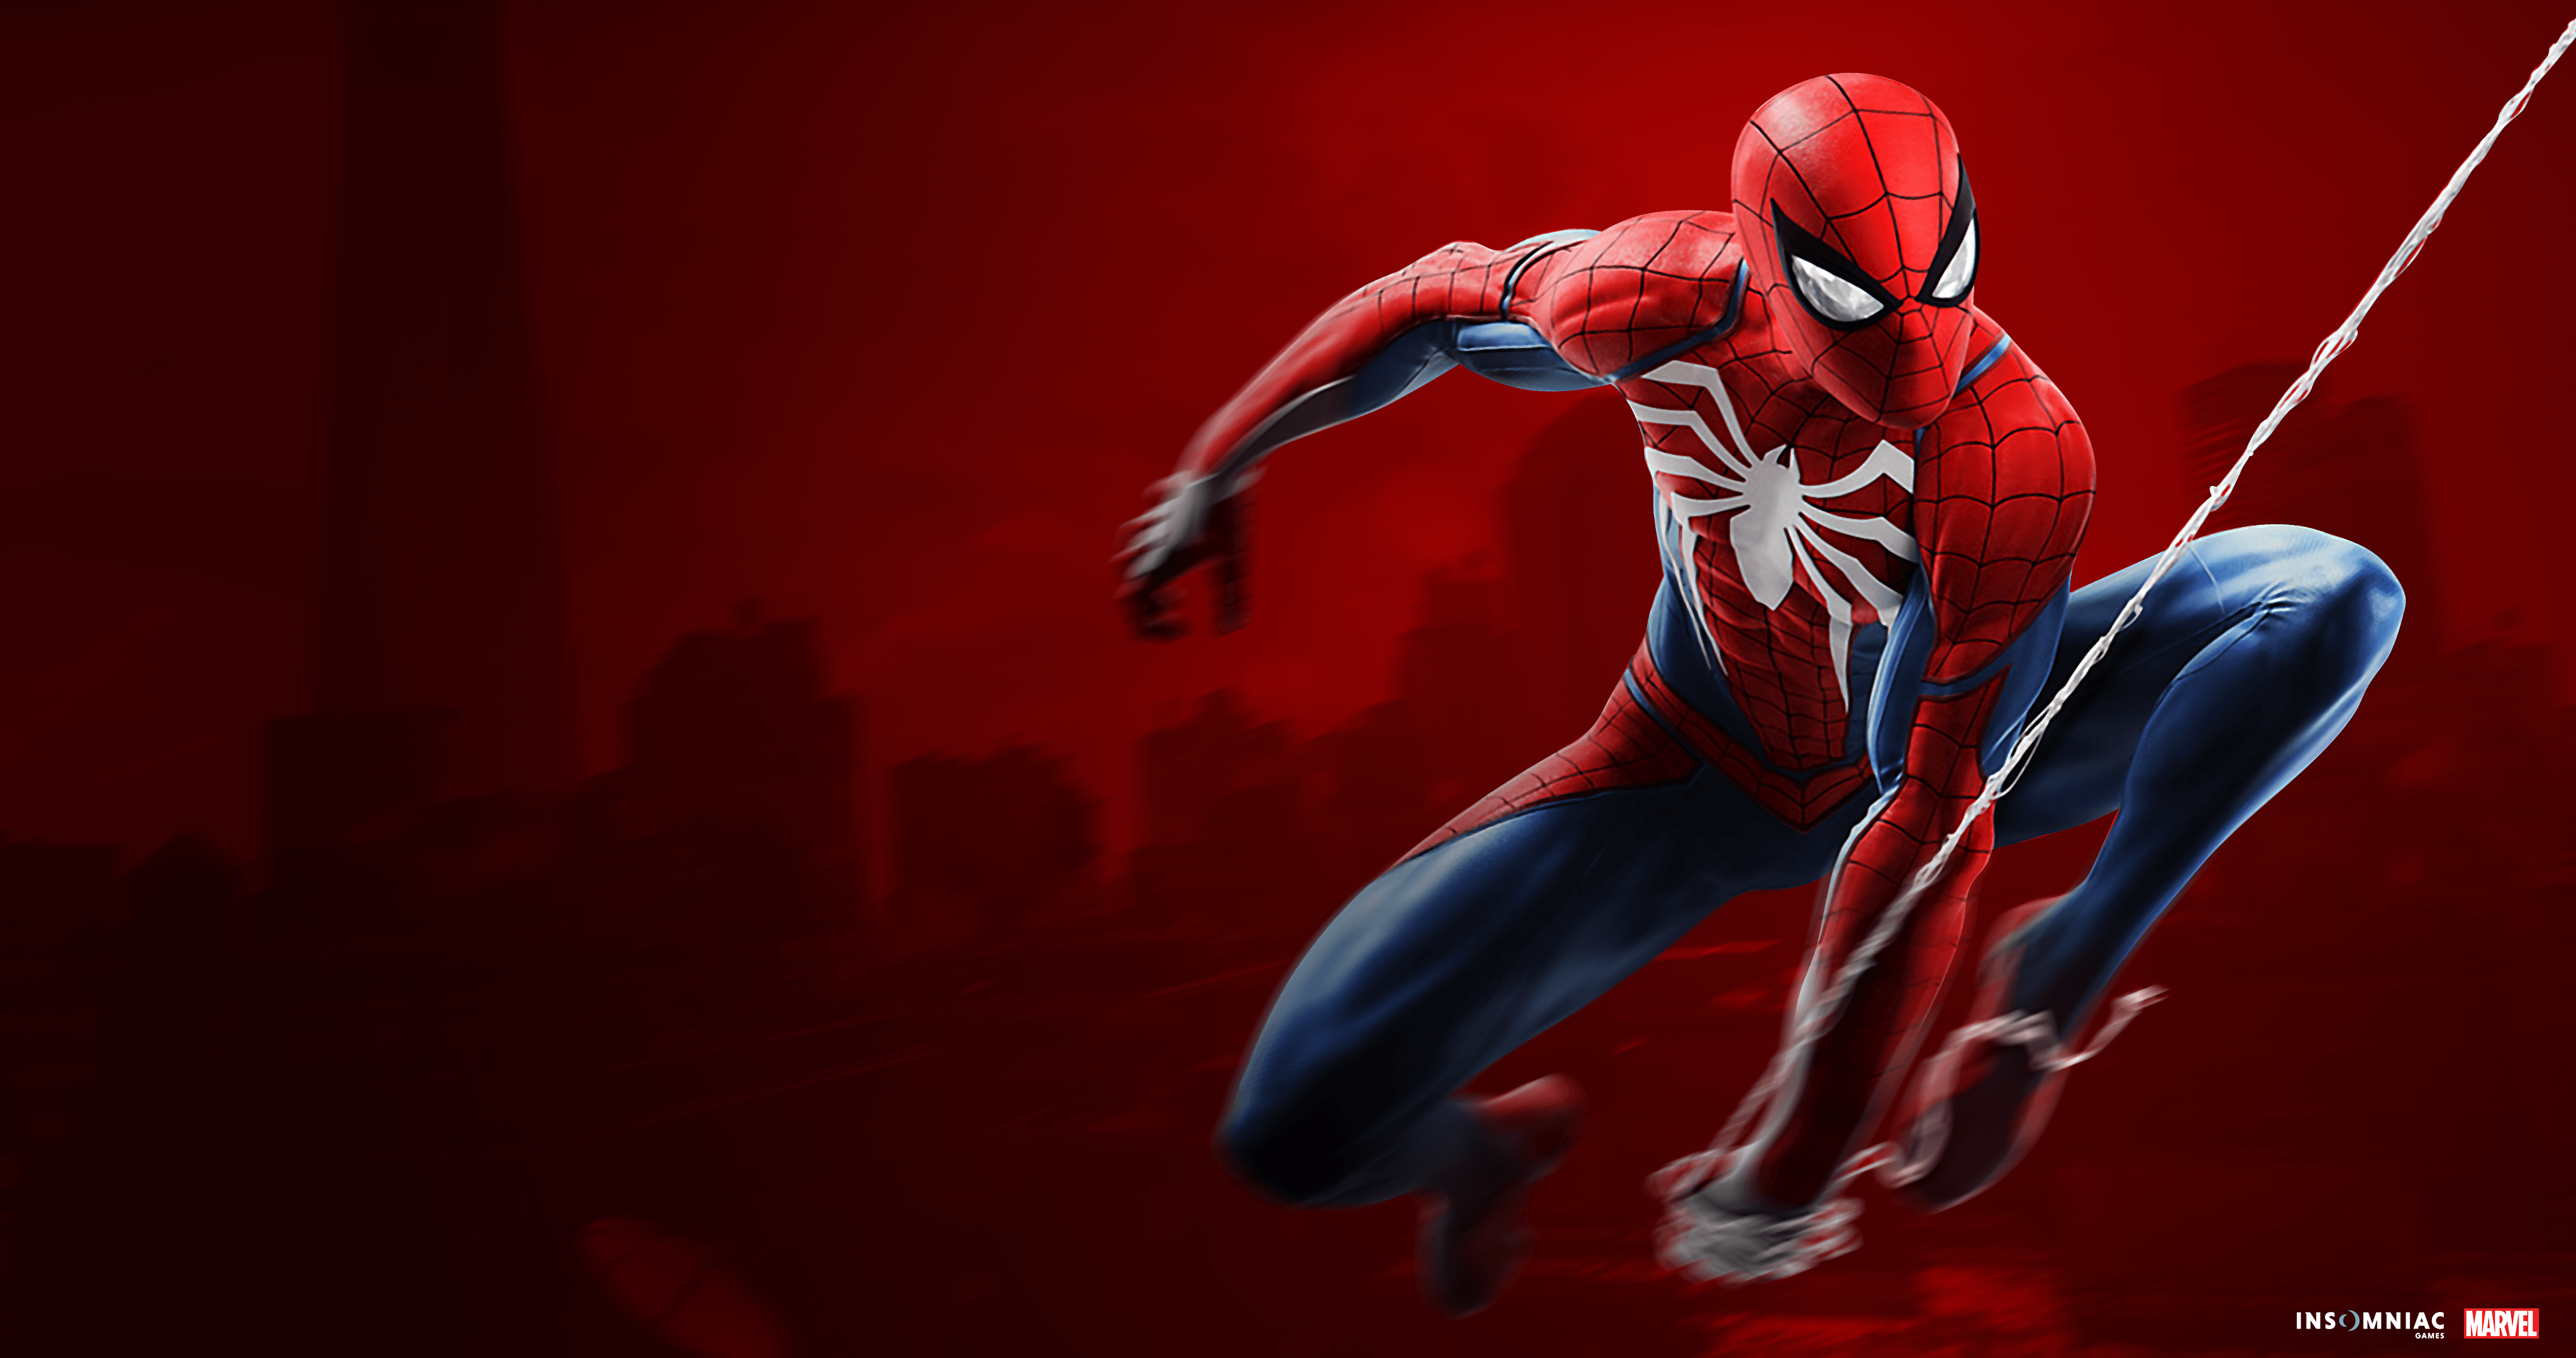 Spider-Man 4K Wallpapers - Wallpaper Cave